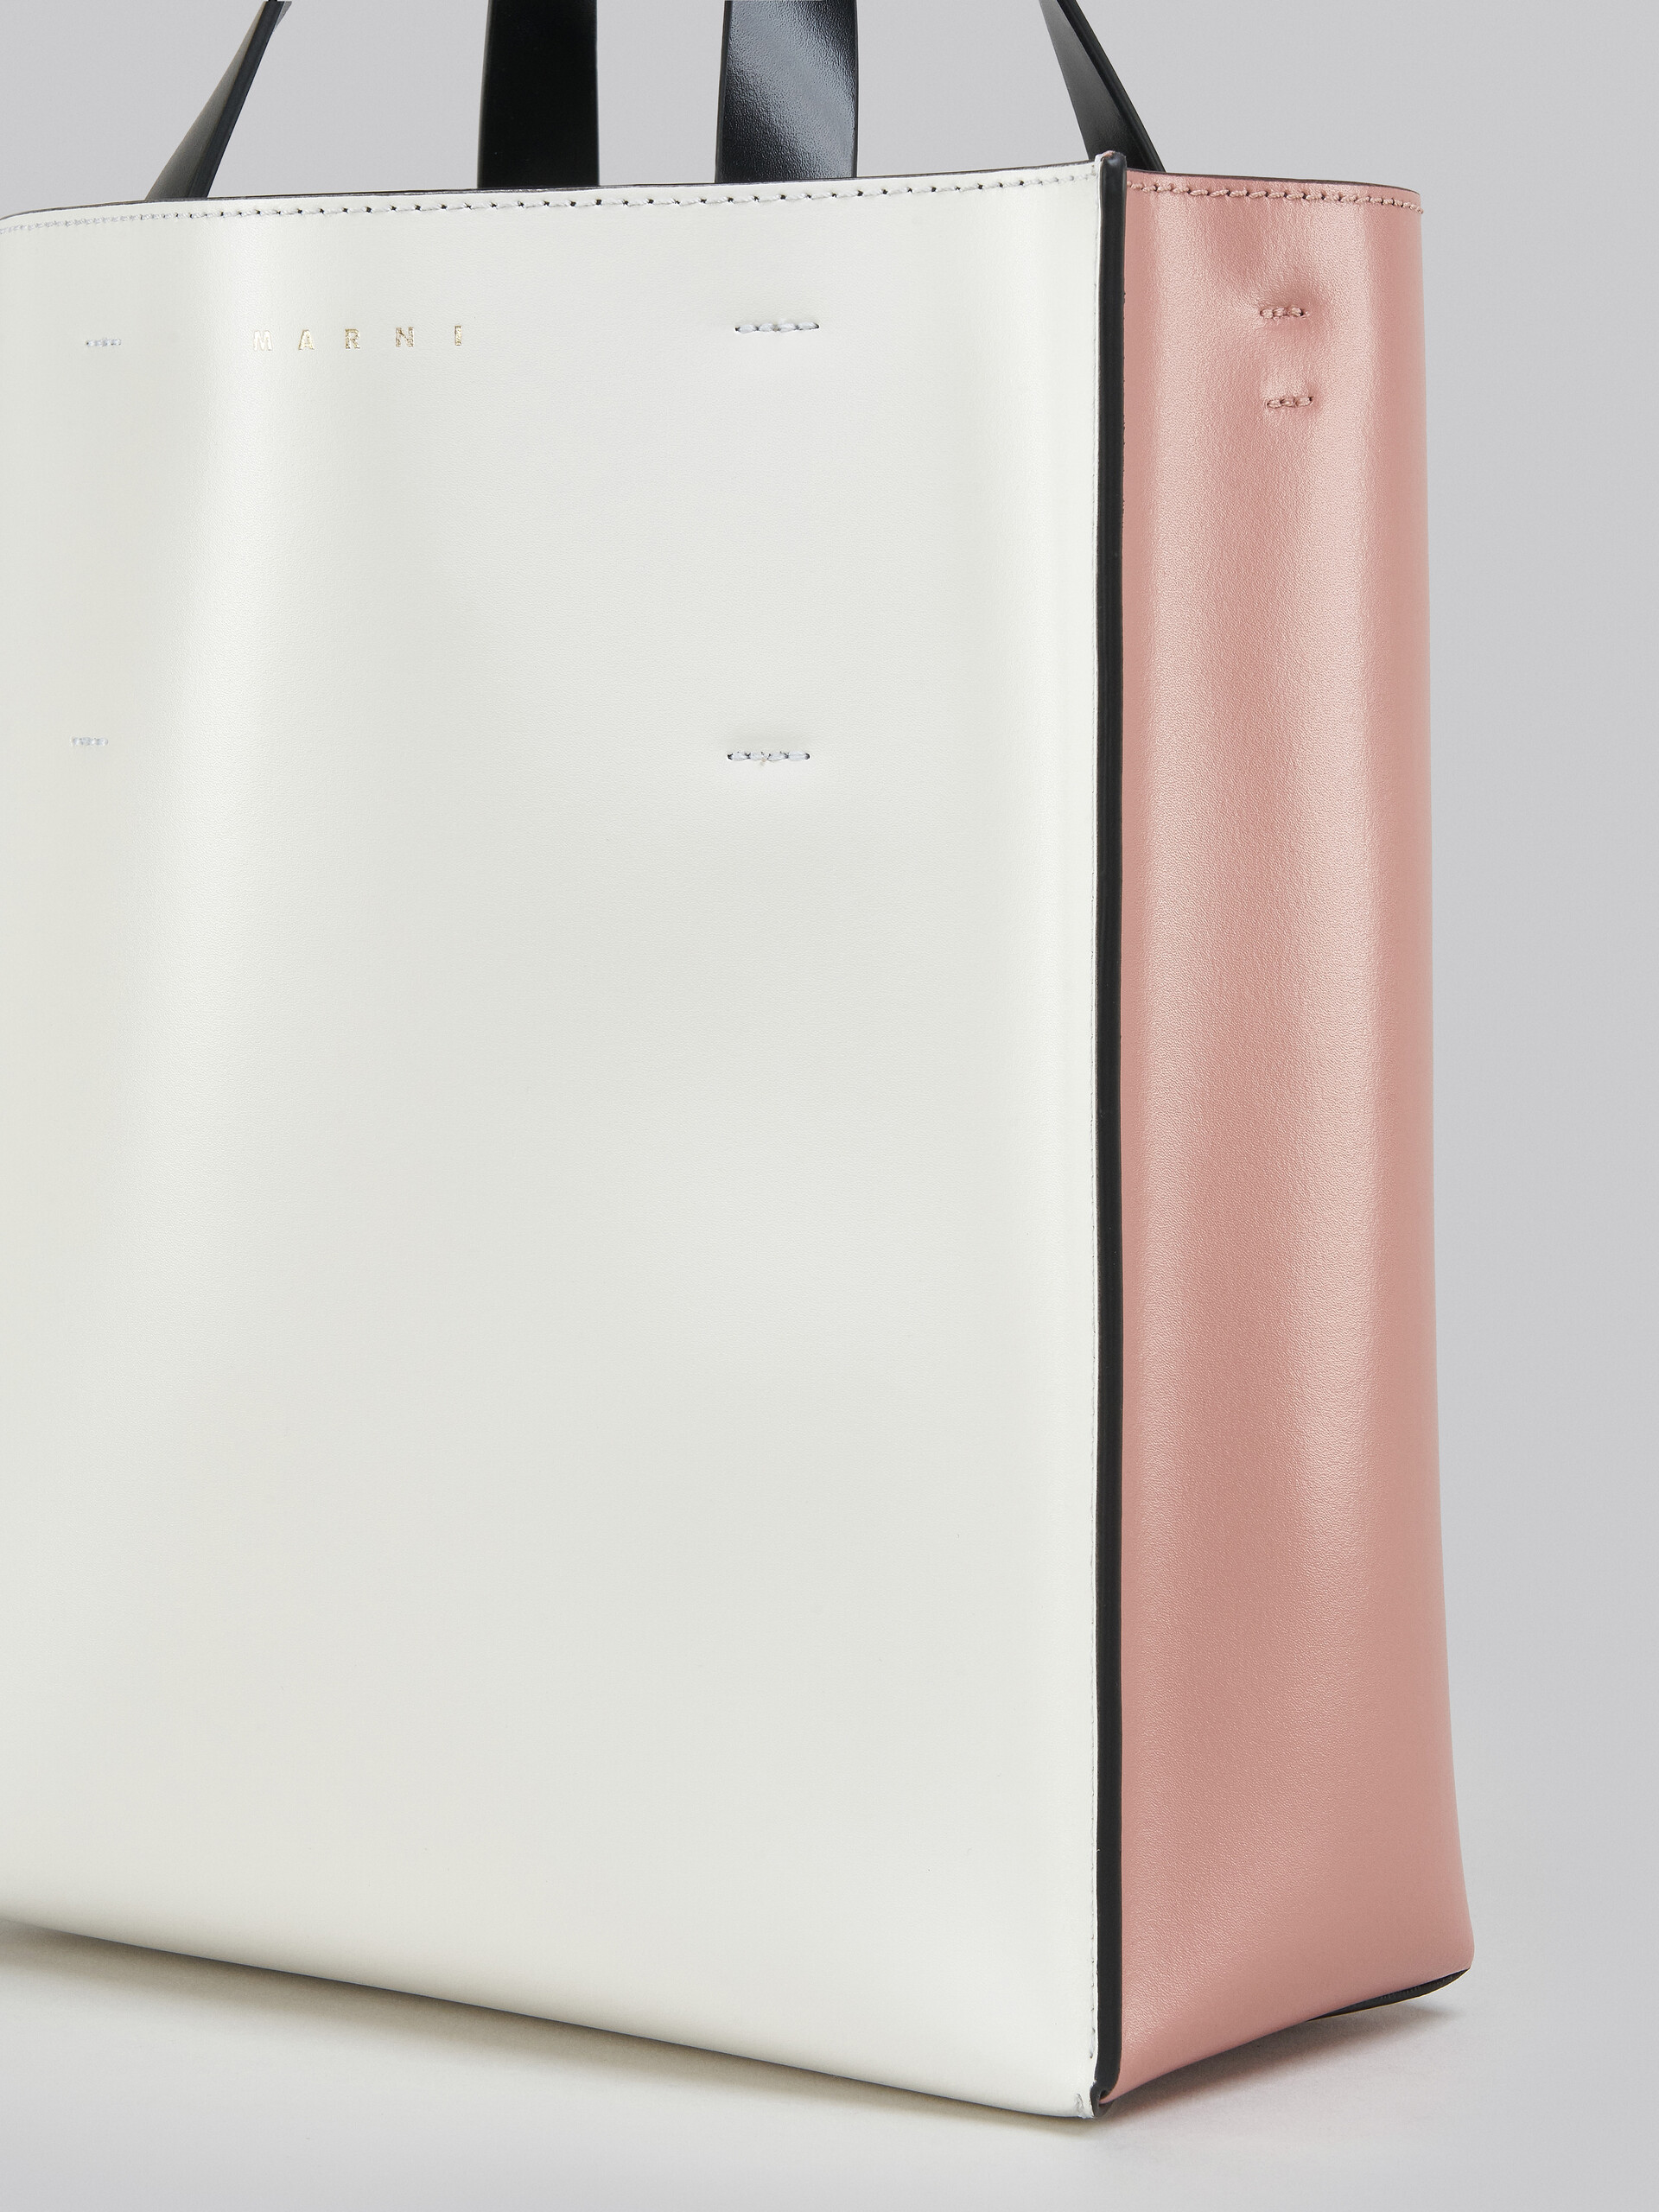 Museo Soft Bag Piccola in pelle bianca e rosa - Borse shopping - Image 5